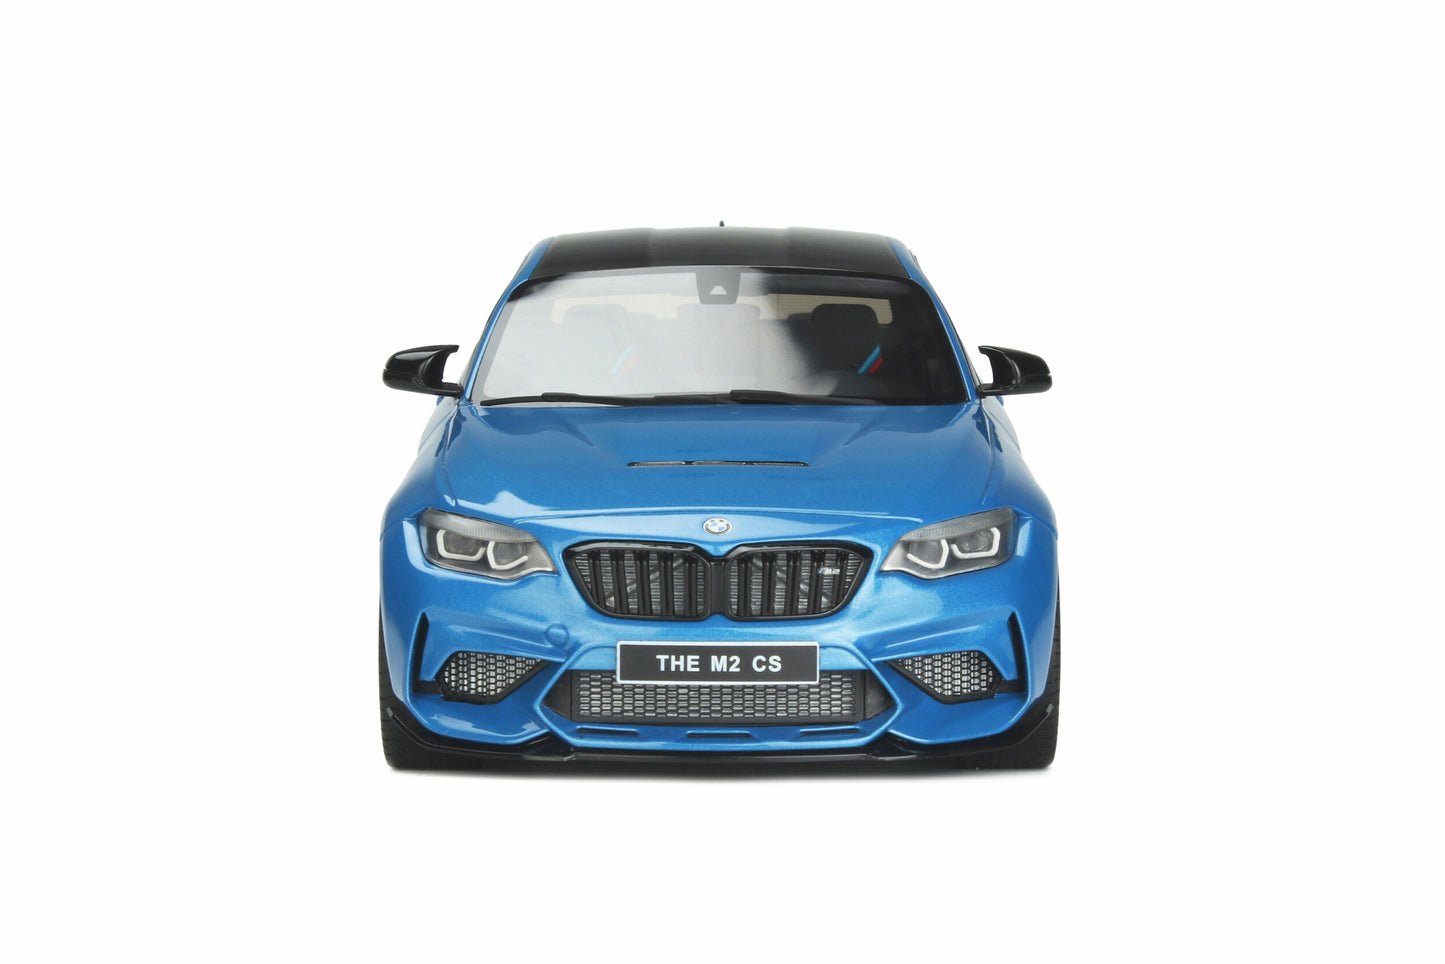 GT Spirit BMW M2 CS (F22) Coupe Misano Blue Metallic w/ Gold Wheels 1:18 Resin